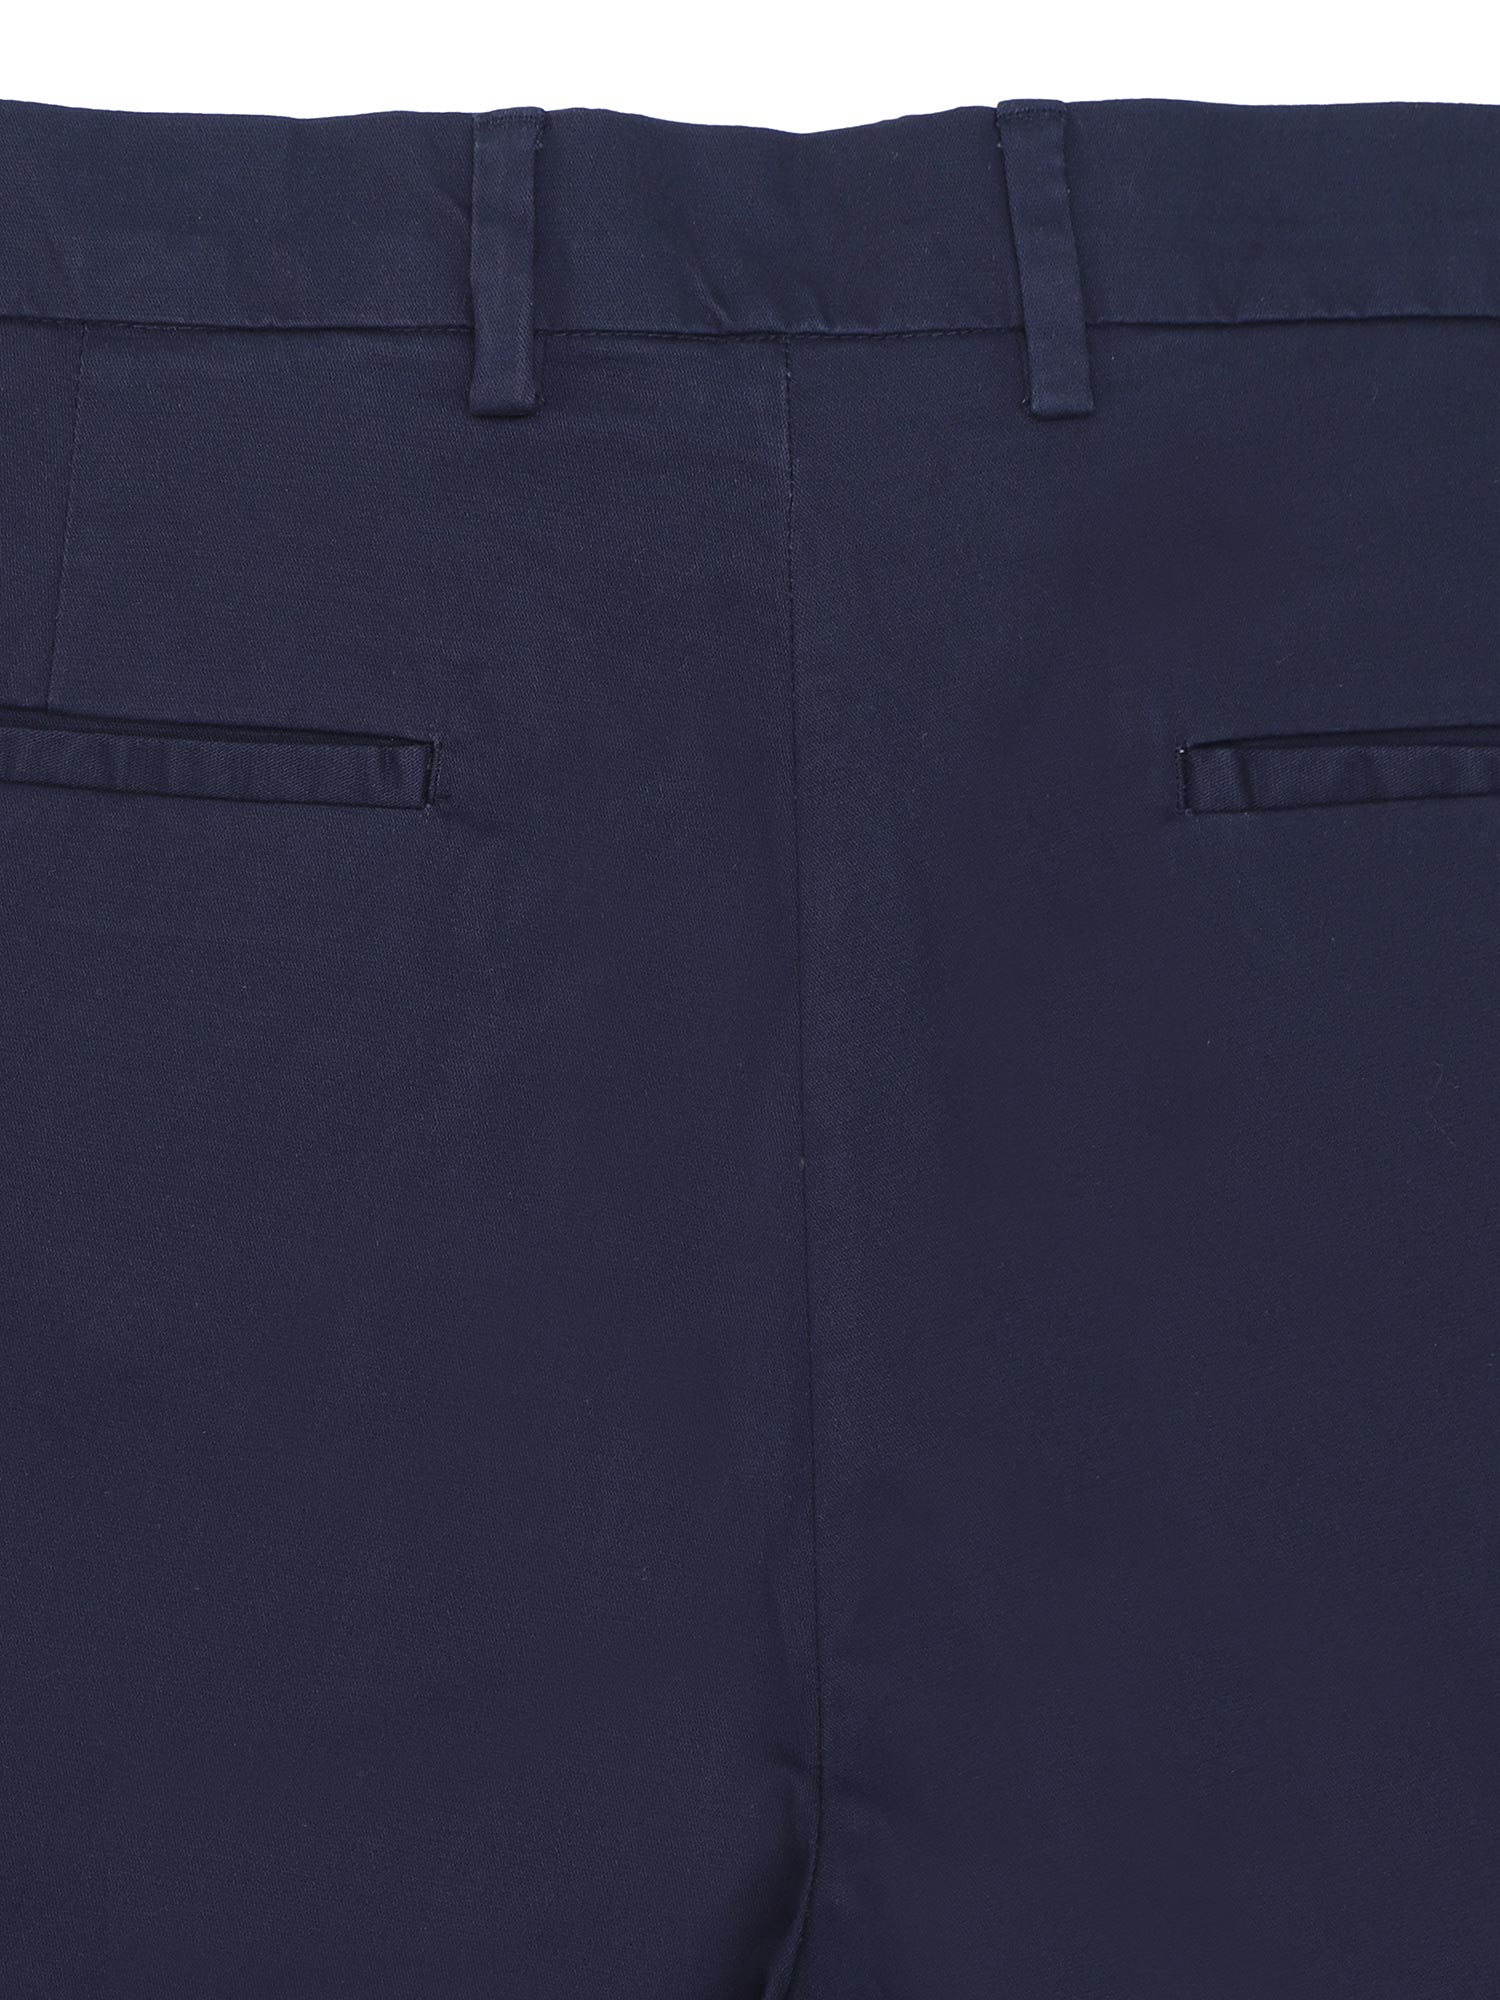 SUITSUPPLY Robin Trousers Men's ~W29 Wool Pleated Turn Up Zip Slim Fit Navy  | eBay